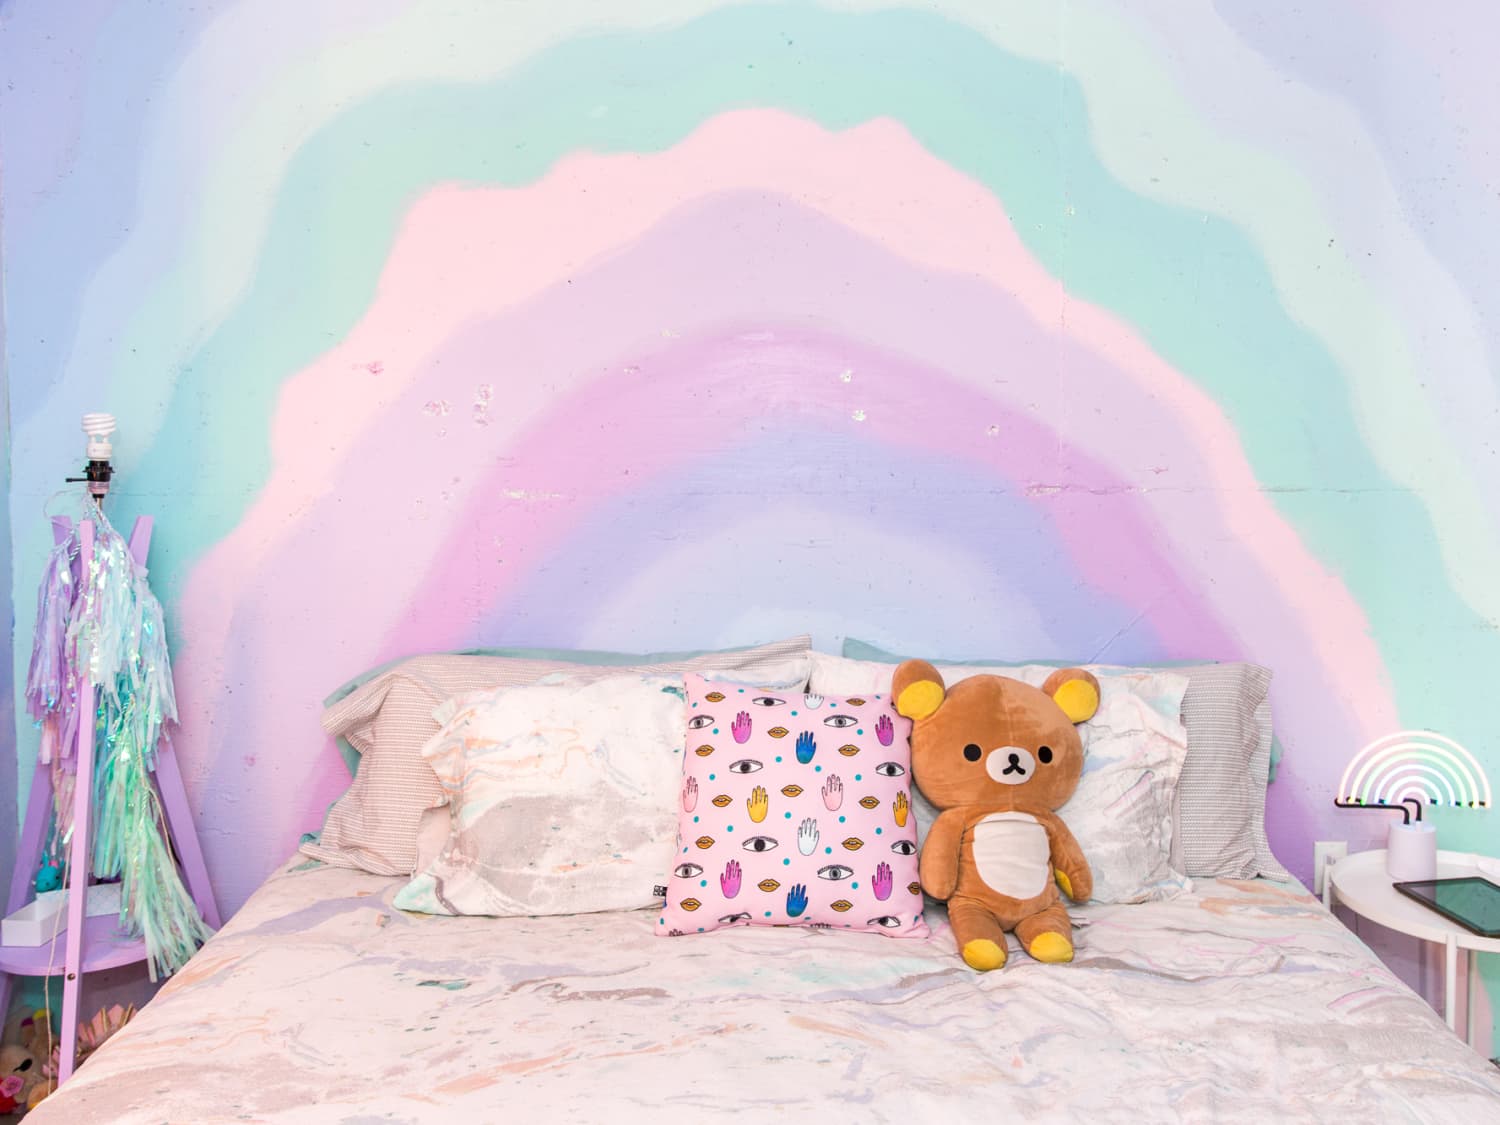 Mini Pastel Rainbow Vinyl Sticker - Wit & Whimsy Toys